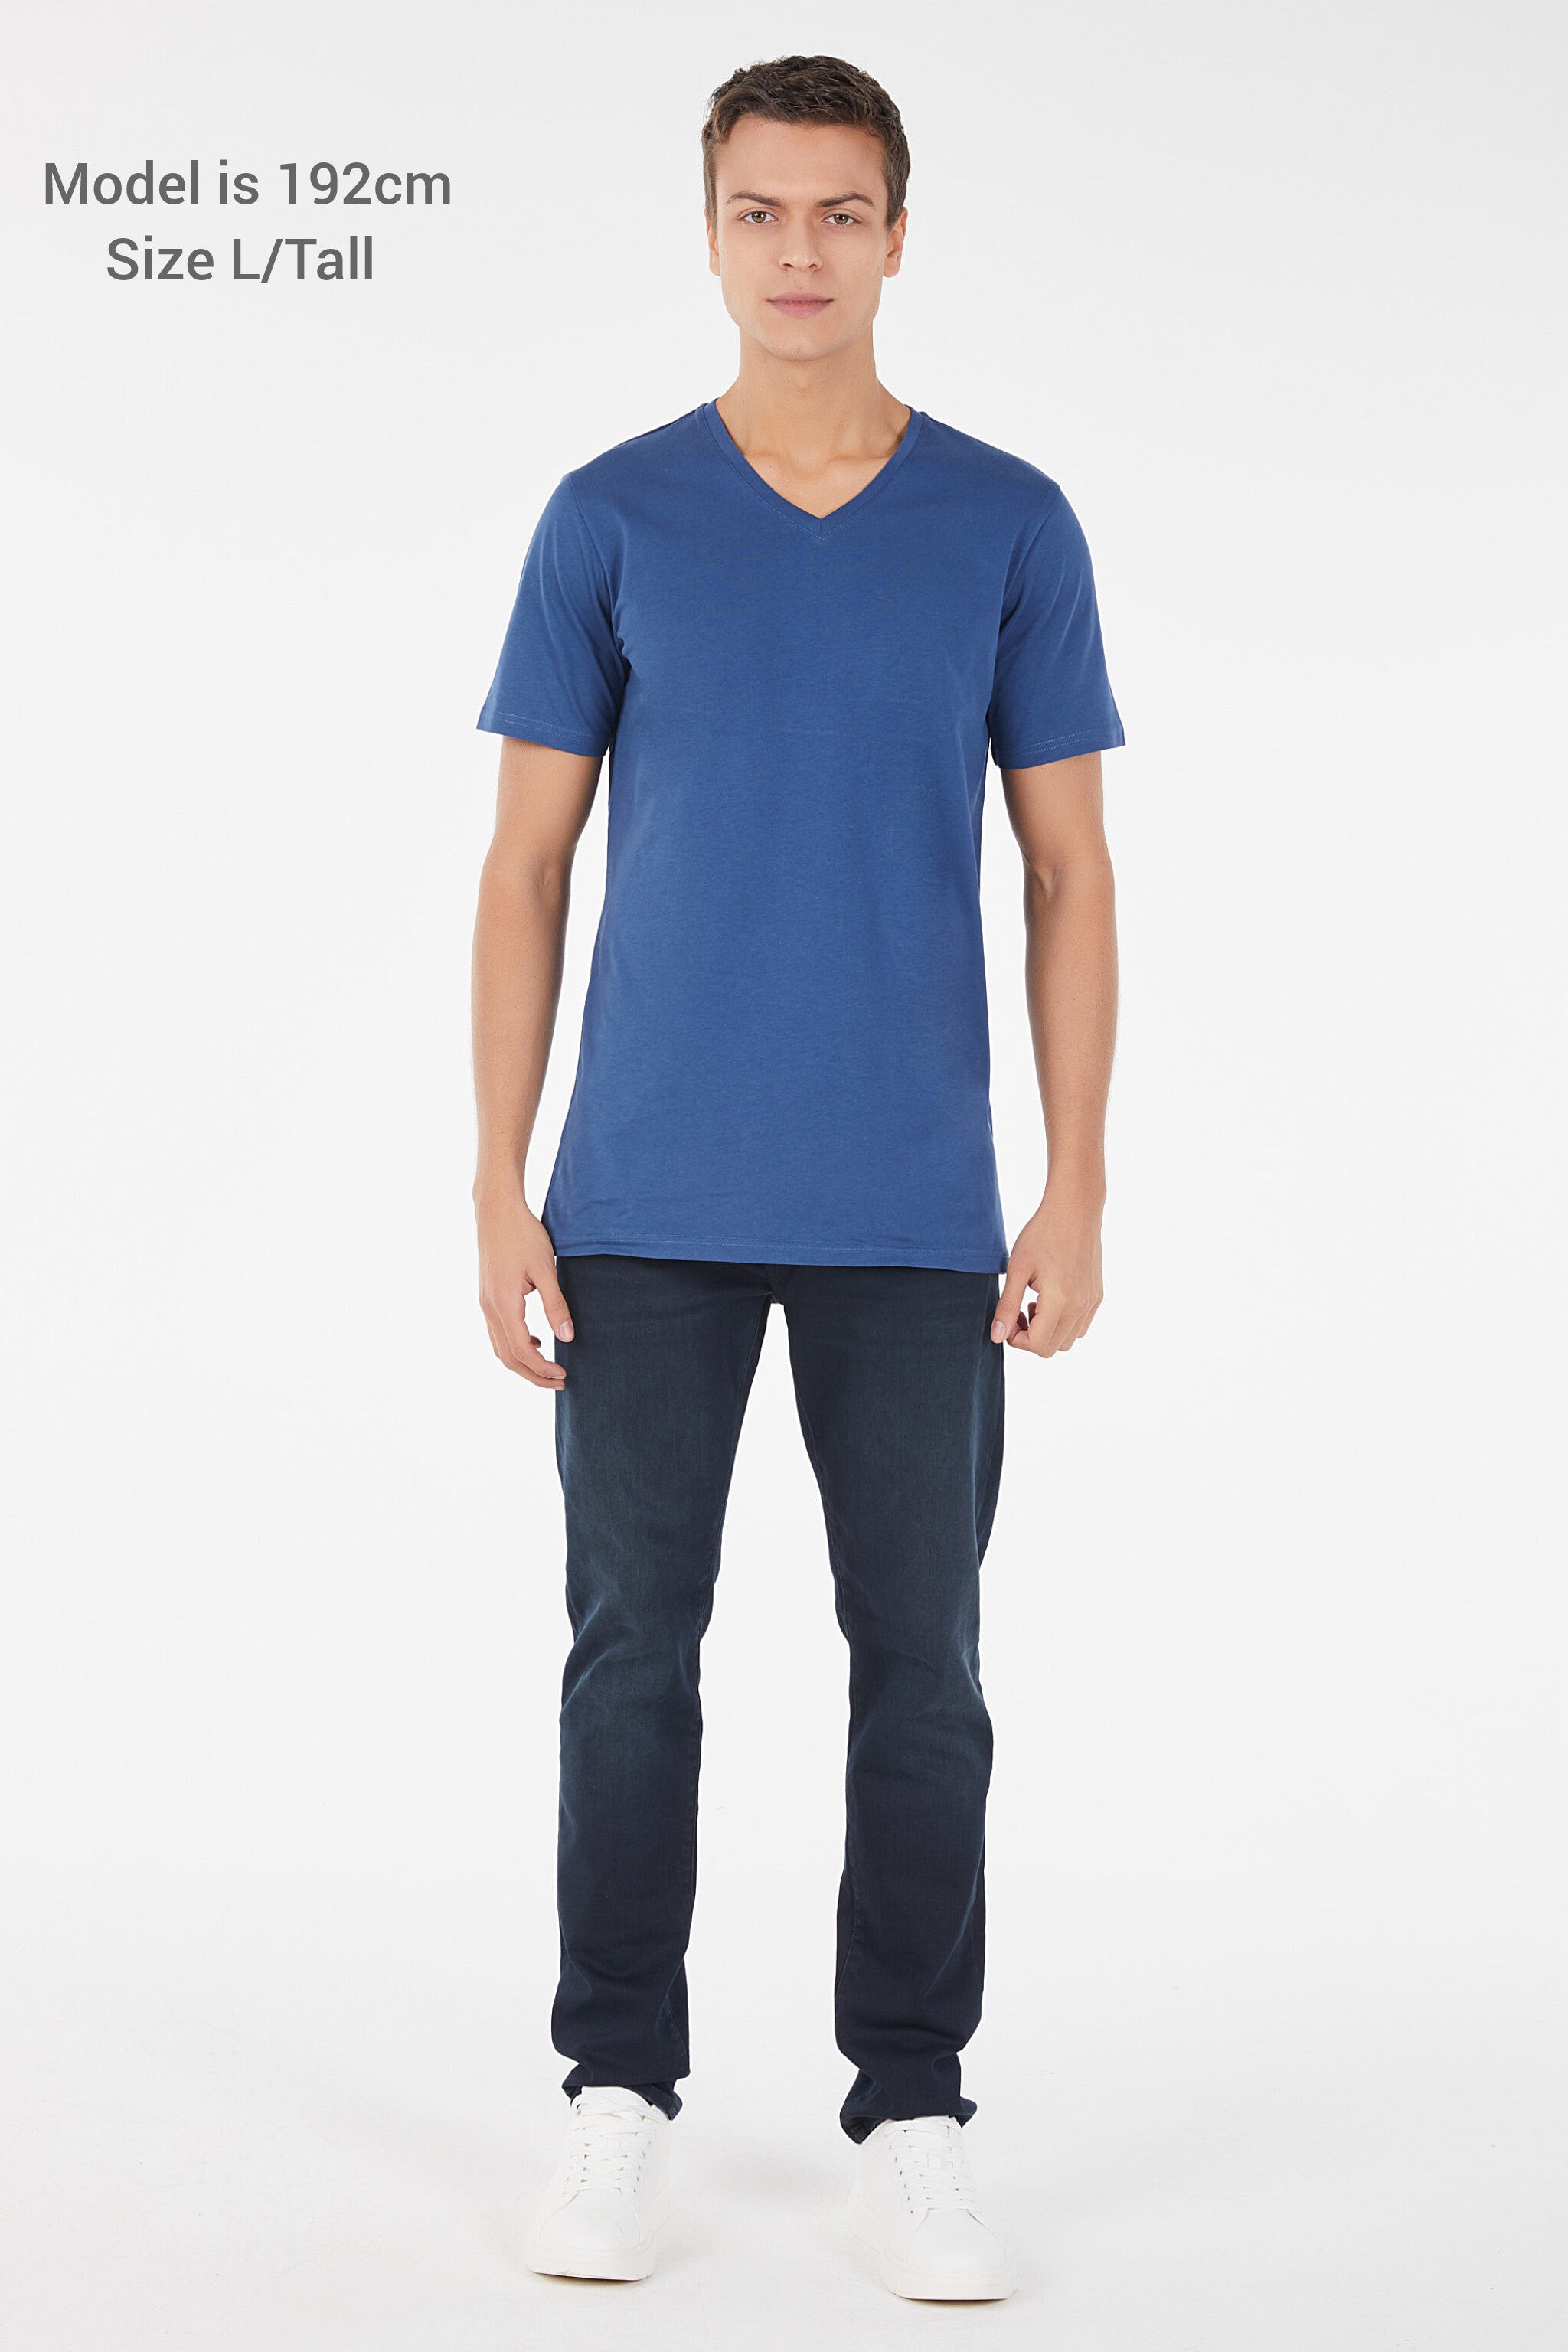 Ajax Blue T-Shirt For Man | Vary Fits